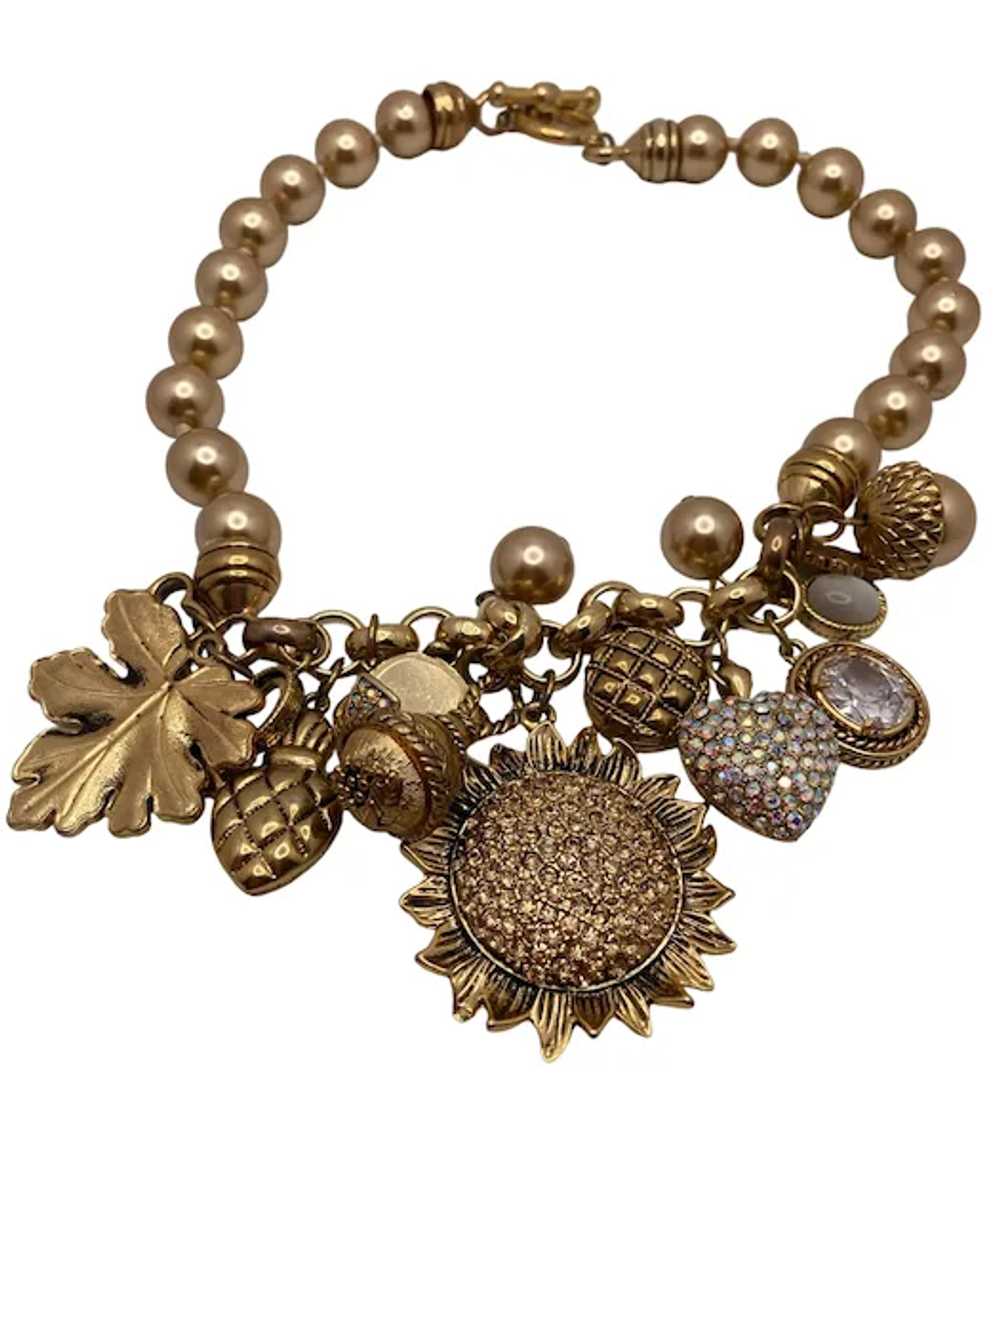 Gorgeous Gold Tone and Rhinestone Charm Necklace - image 2